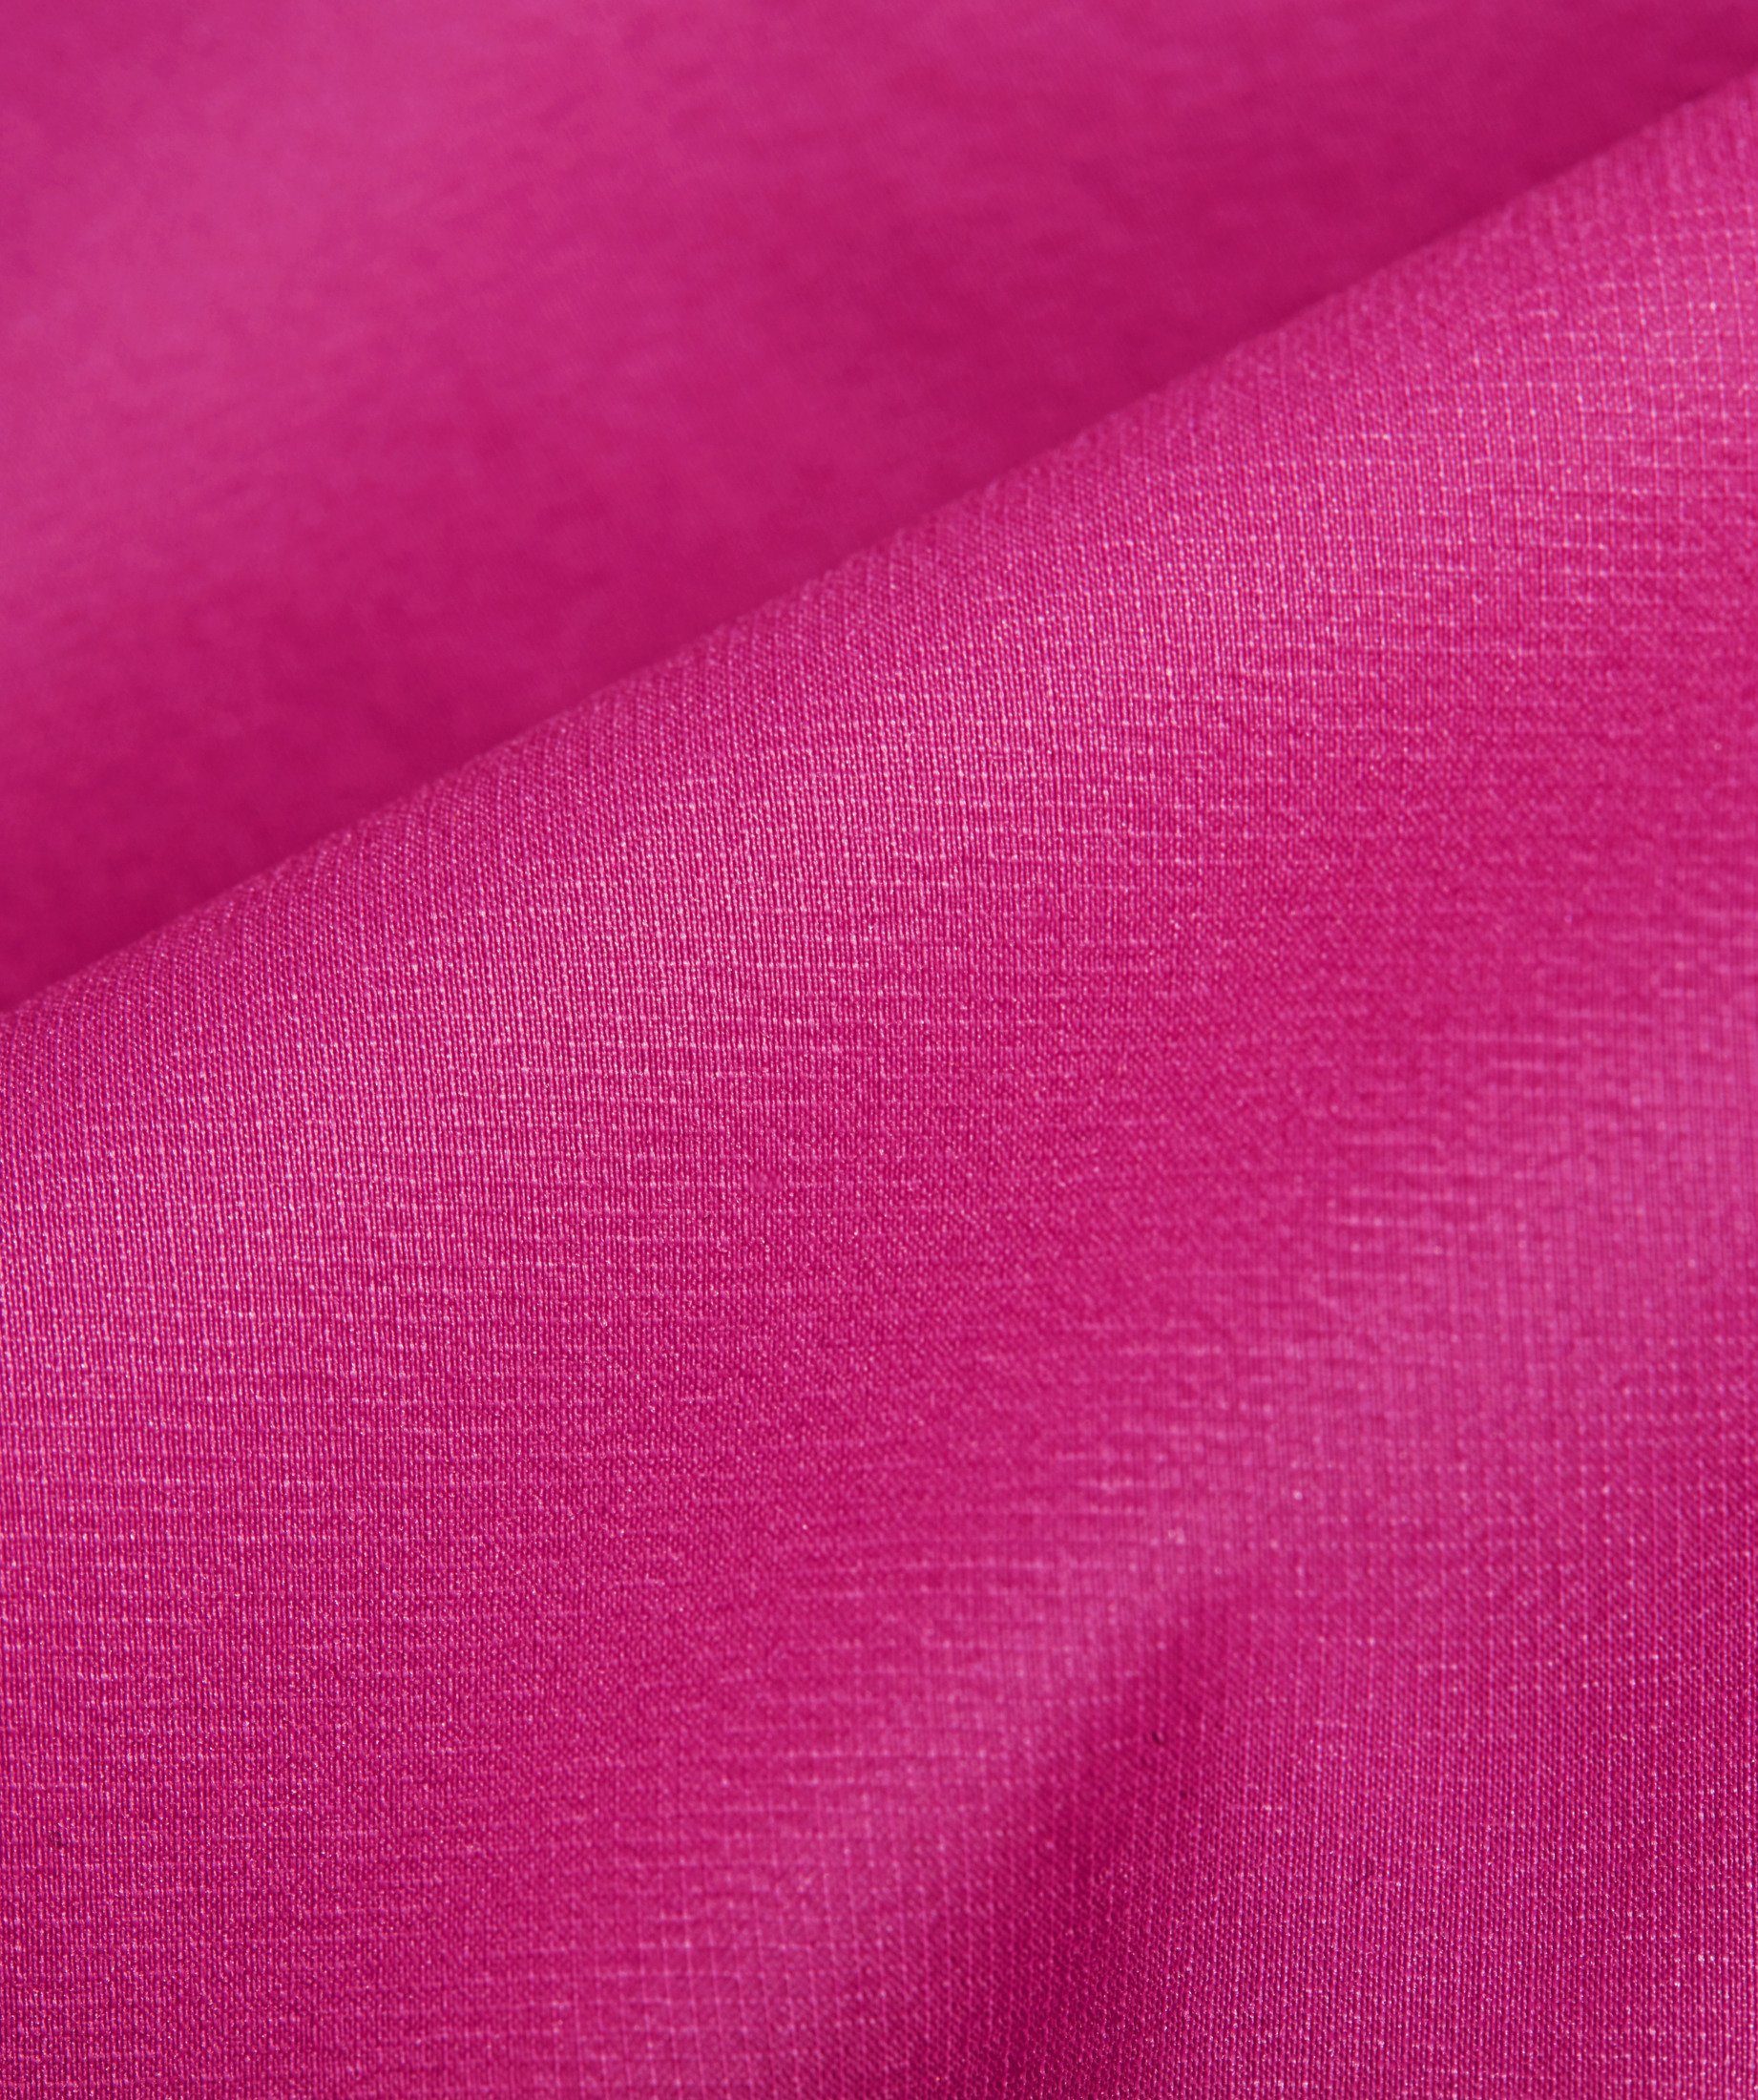 Mammut Sporthose Aenergy Insulation pink-marine Pants Hybrid Women IN